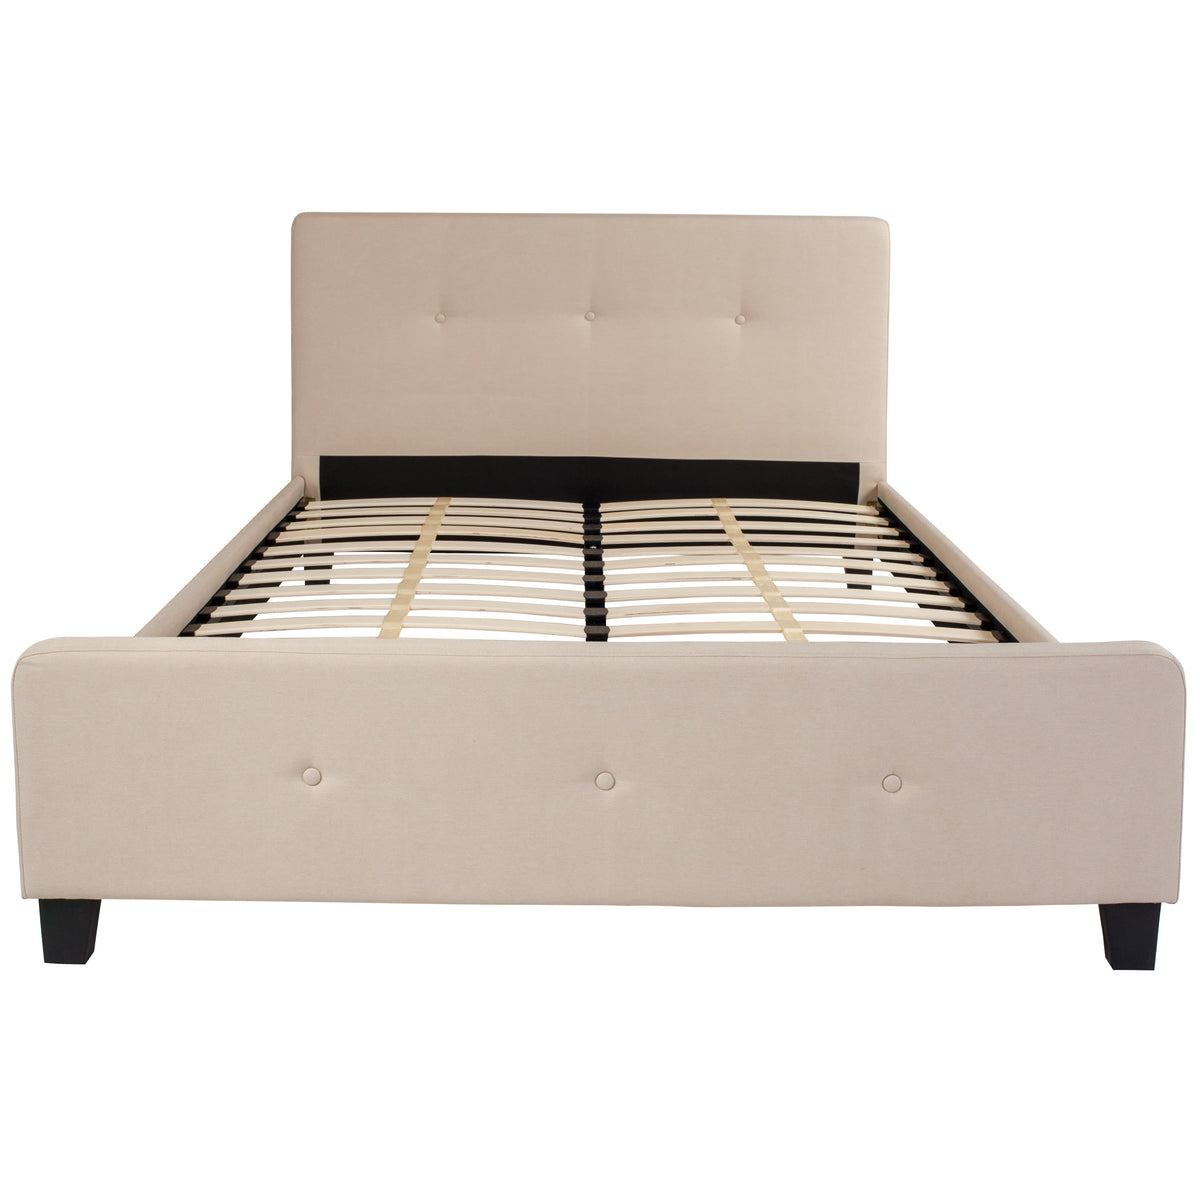 Beige,Queen |#| Queen Size Three Button Tufted Upholstered Platform Bed in Beige Fabric